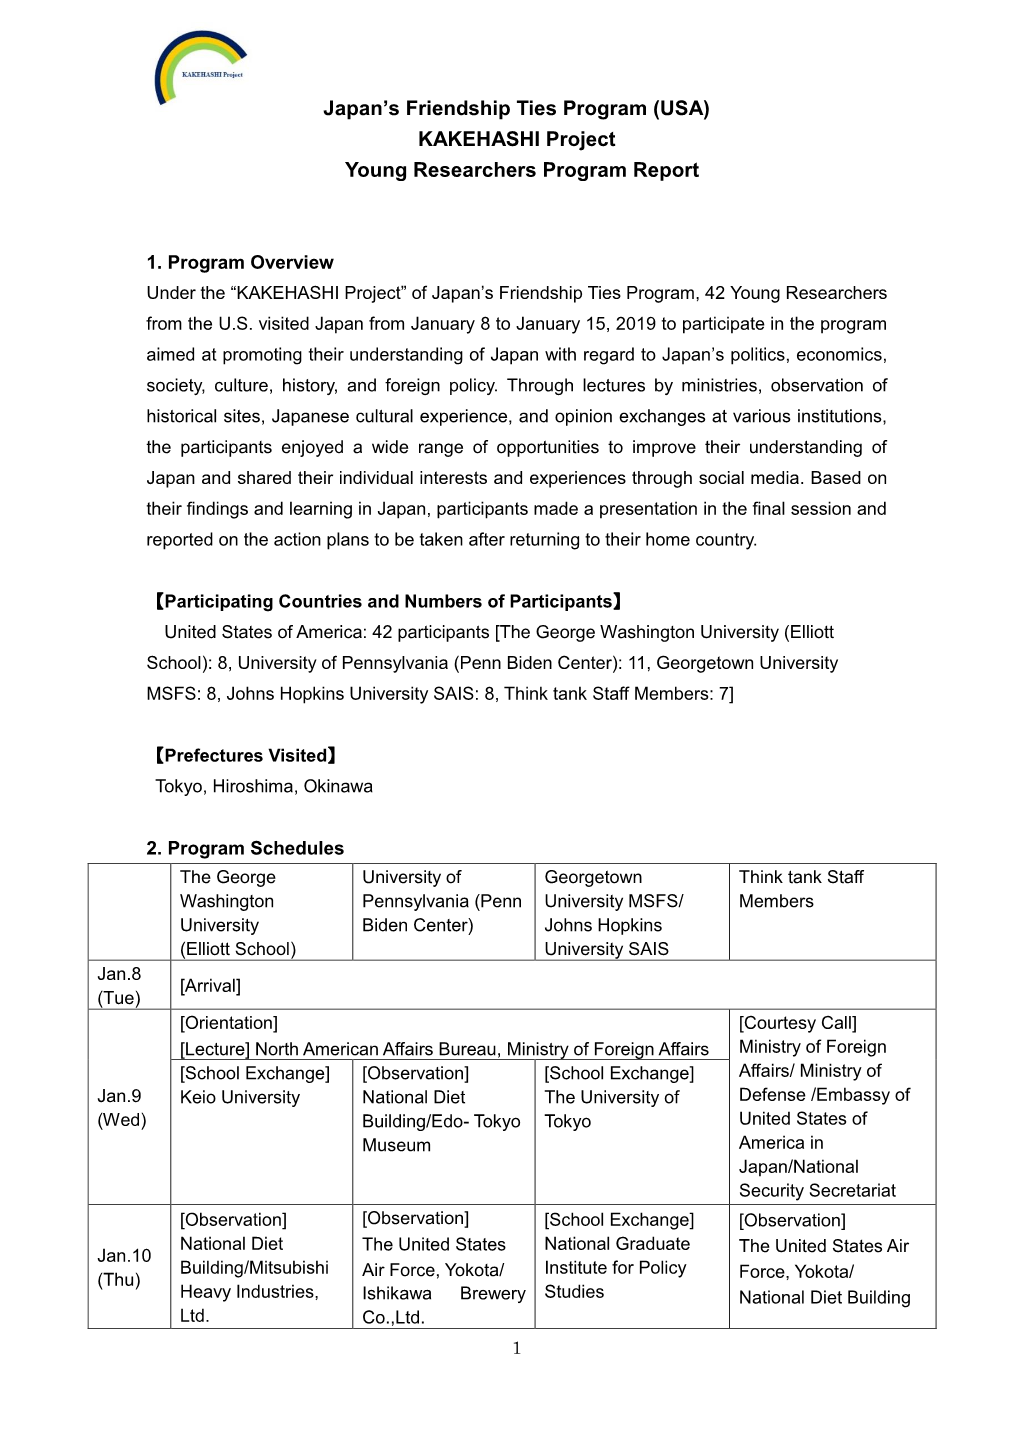 KAKEHASHI Project Young Researchers Program Report